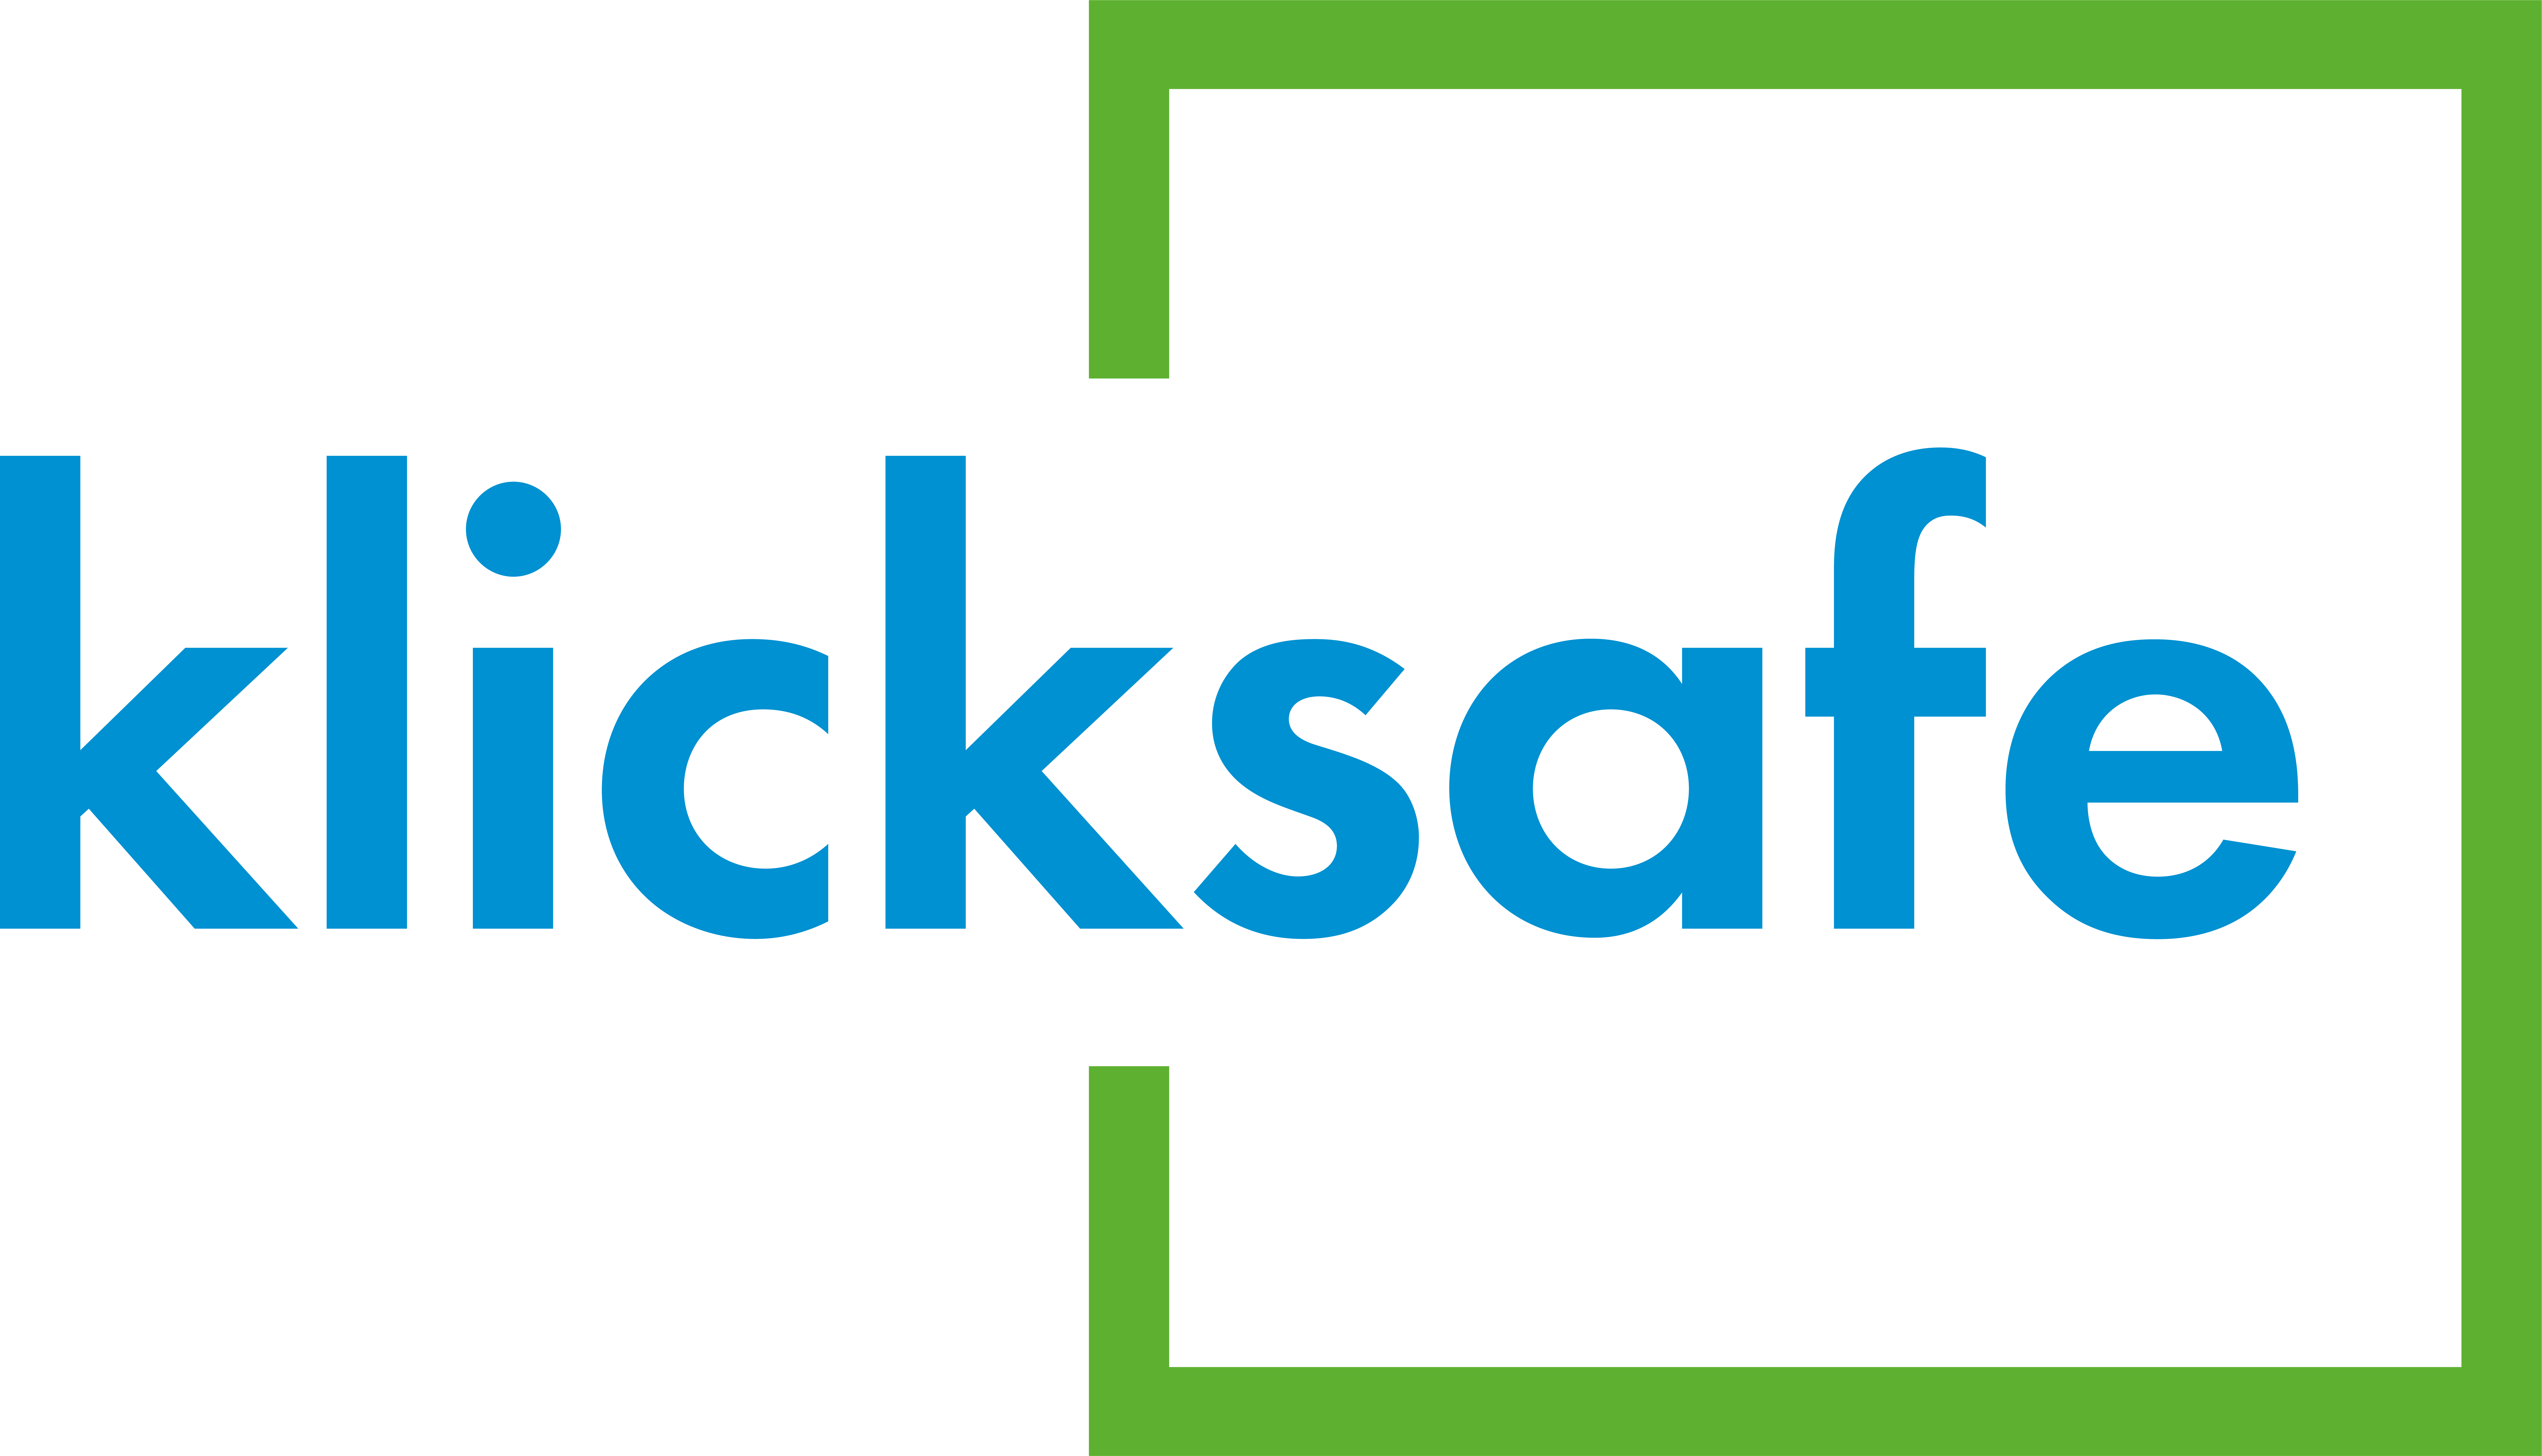 Digitale Gewalt klicksafe Logo no Claim